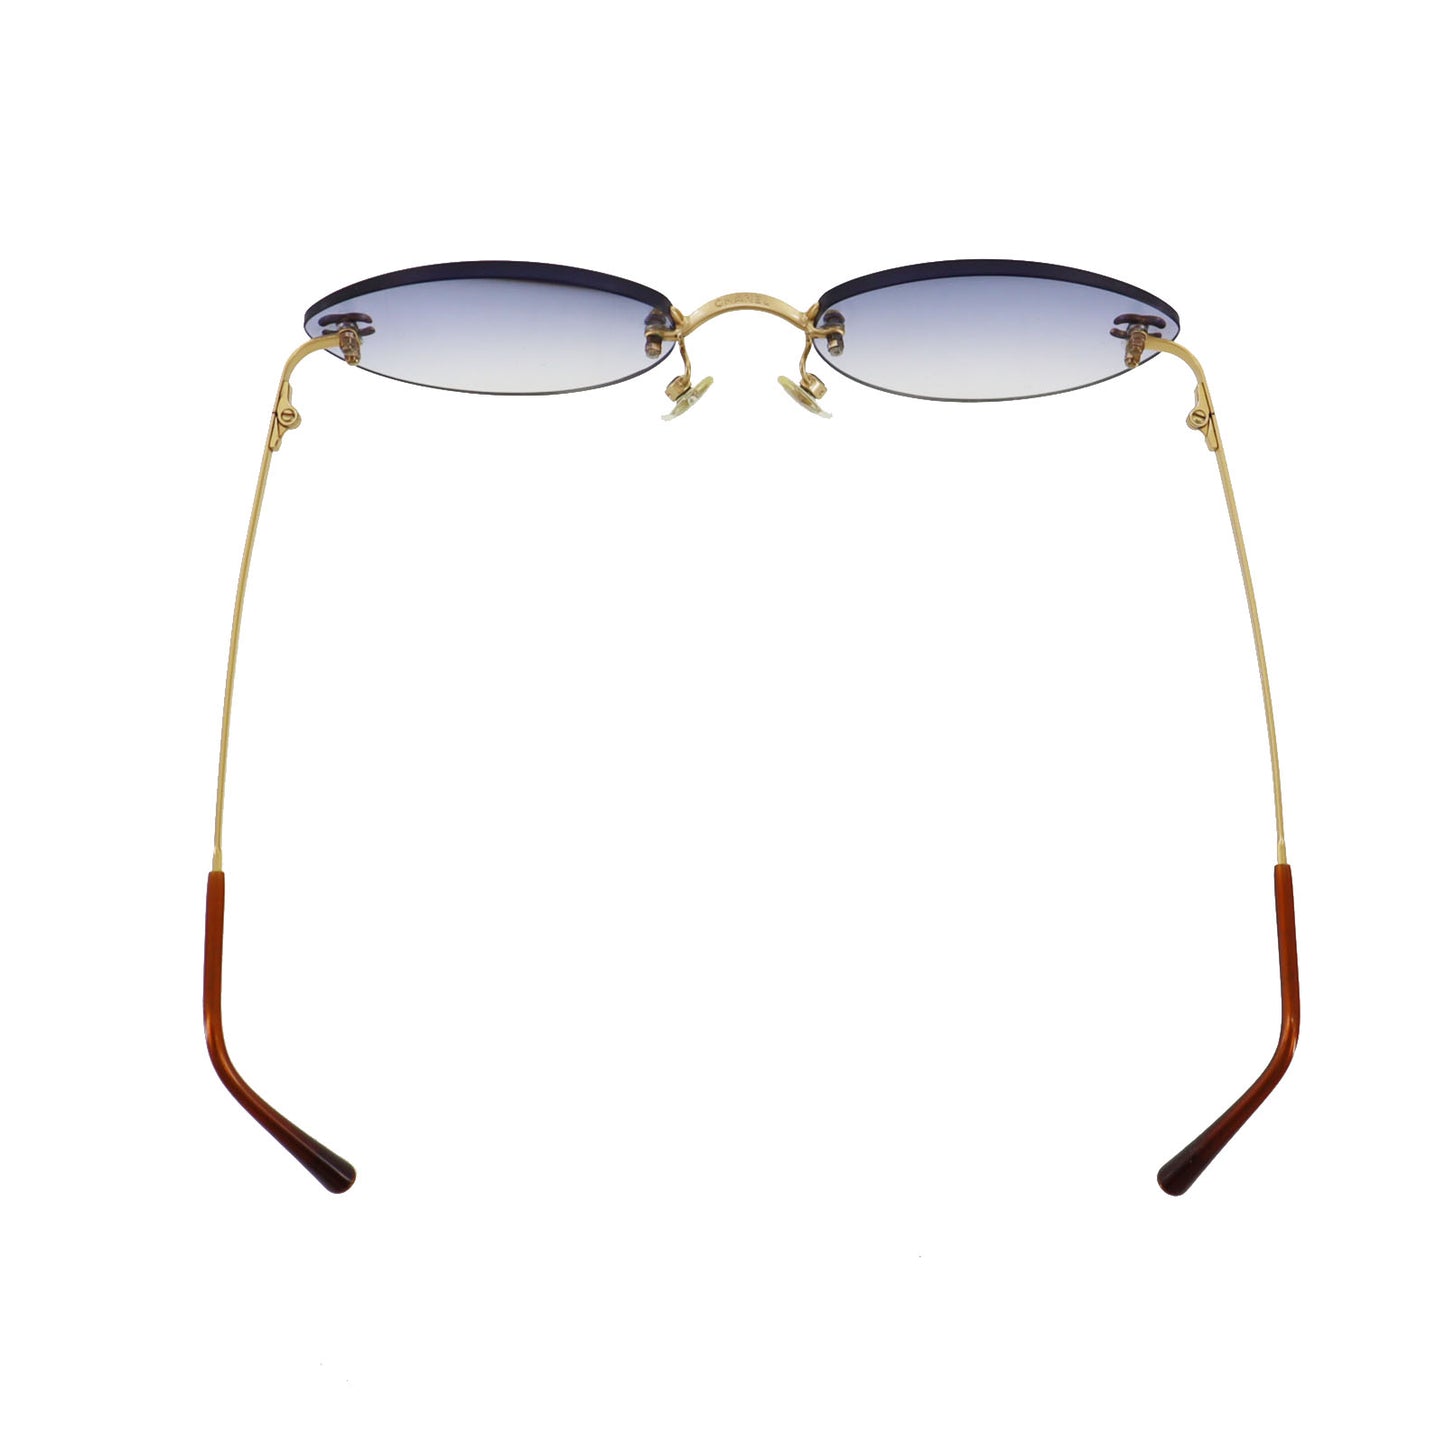 CHANEL Rimless Medical Glasses Sunglasses Blue Eye Wear #CH54